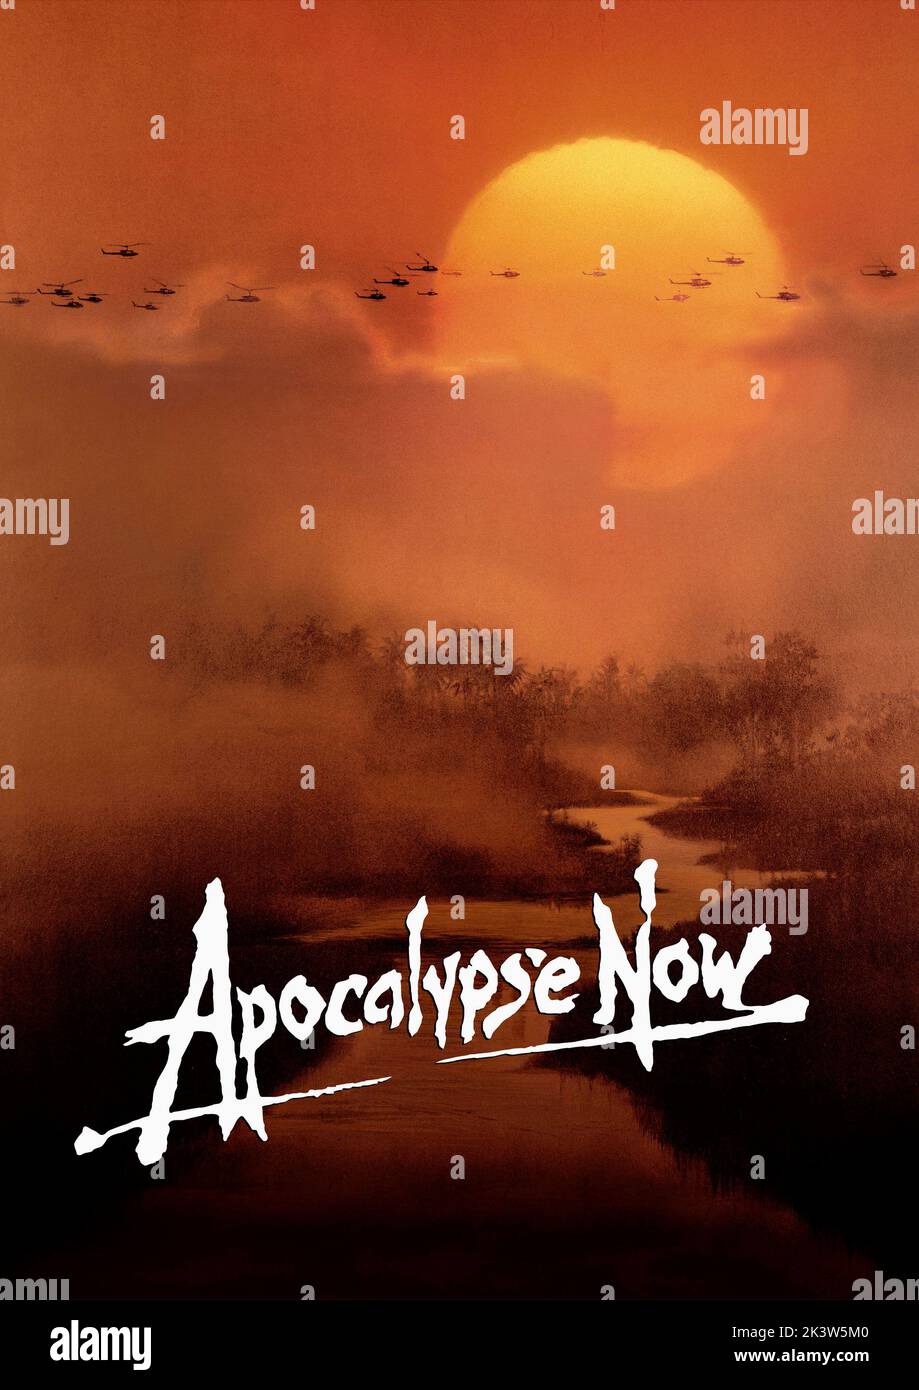 Apocalypse Now 1979 Apocalypse Now Movie Poster. Stock Photo